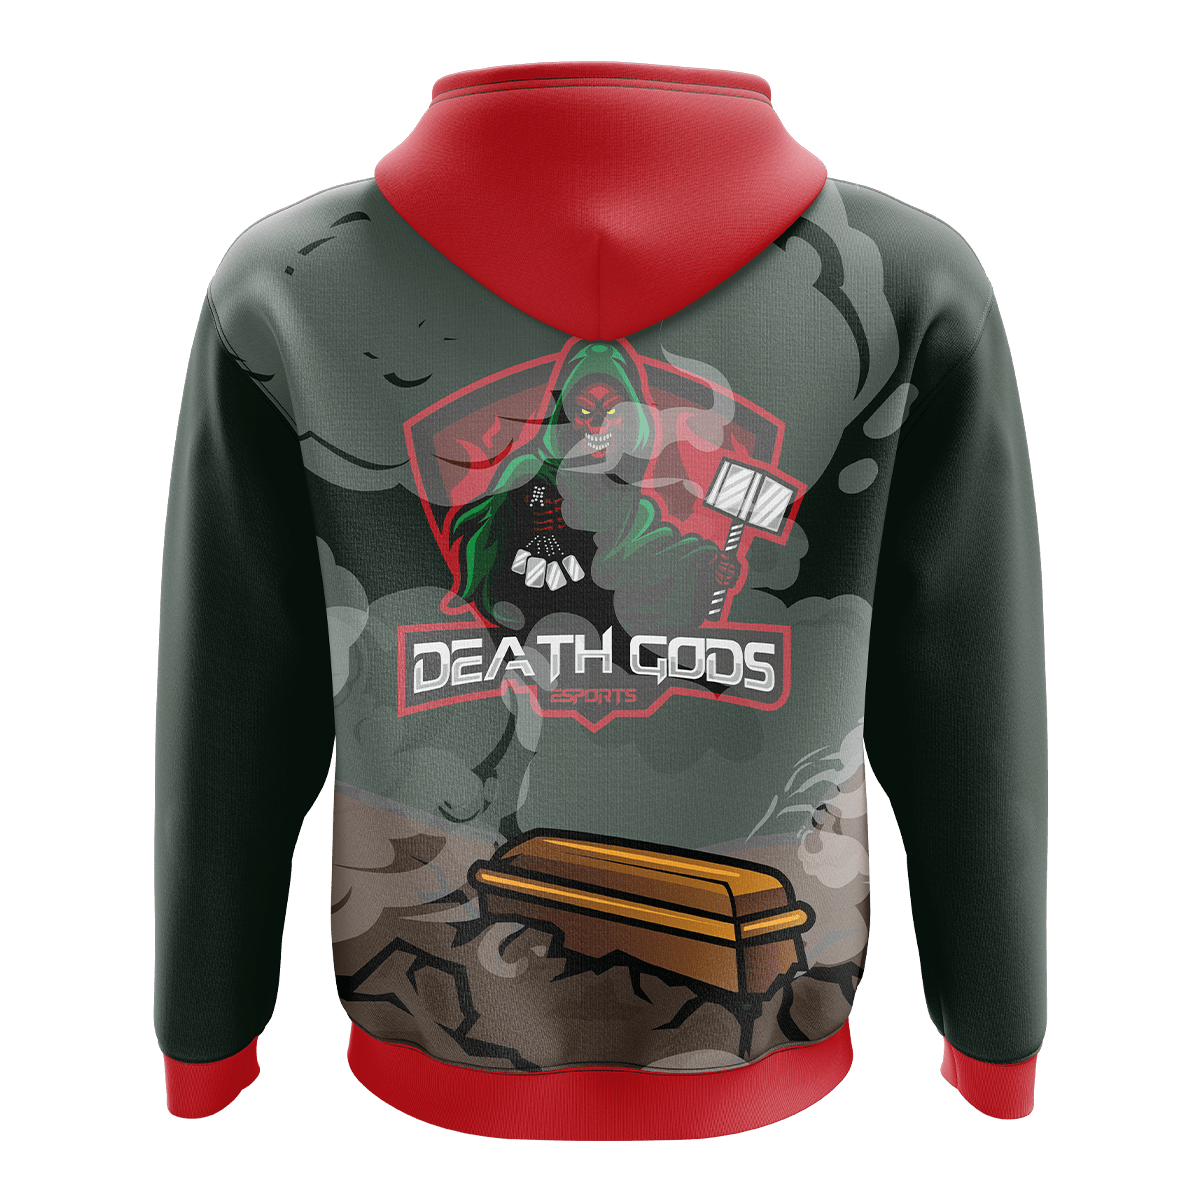 DEATH GODS ESPORTS - Crew Zipper 2020